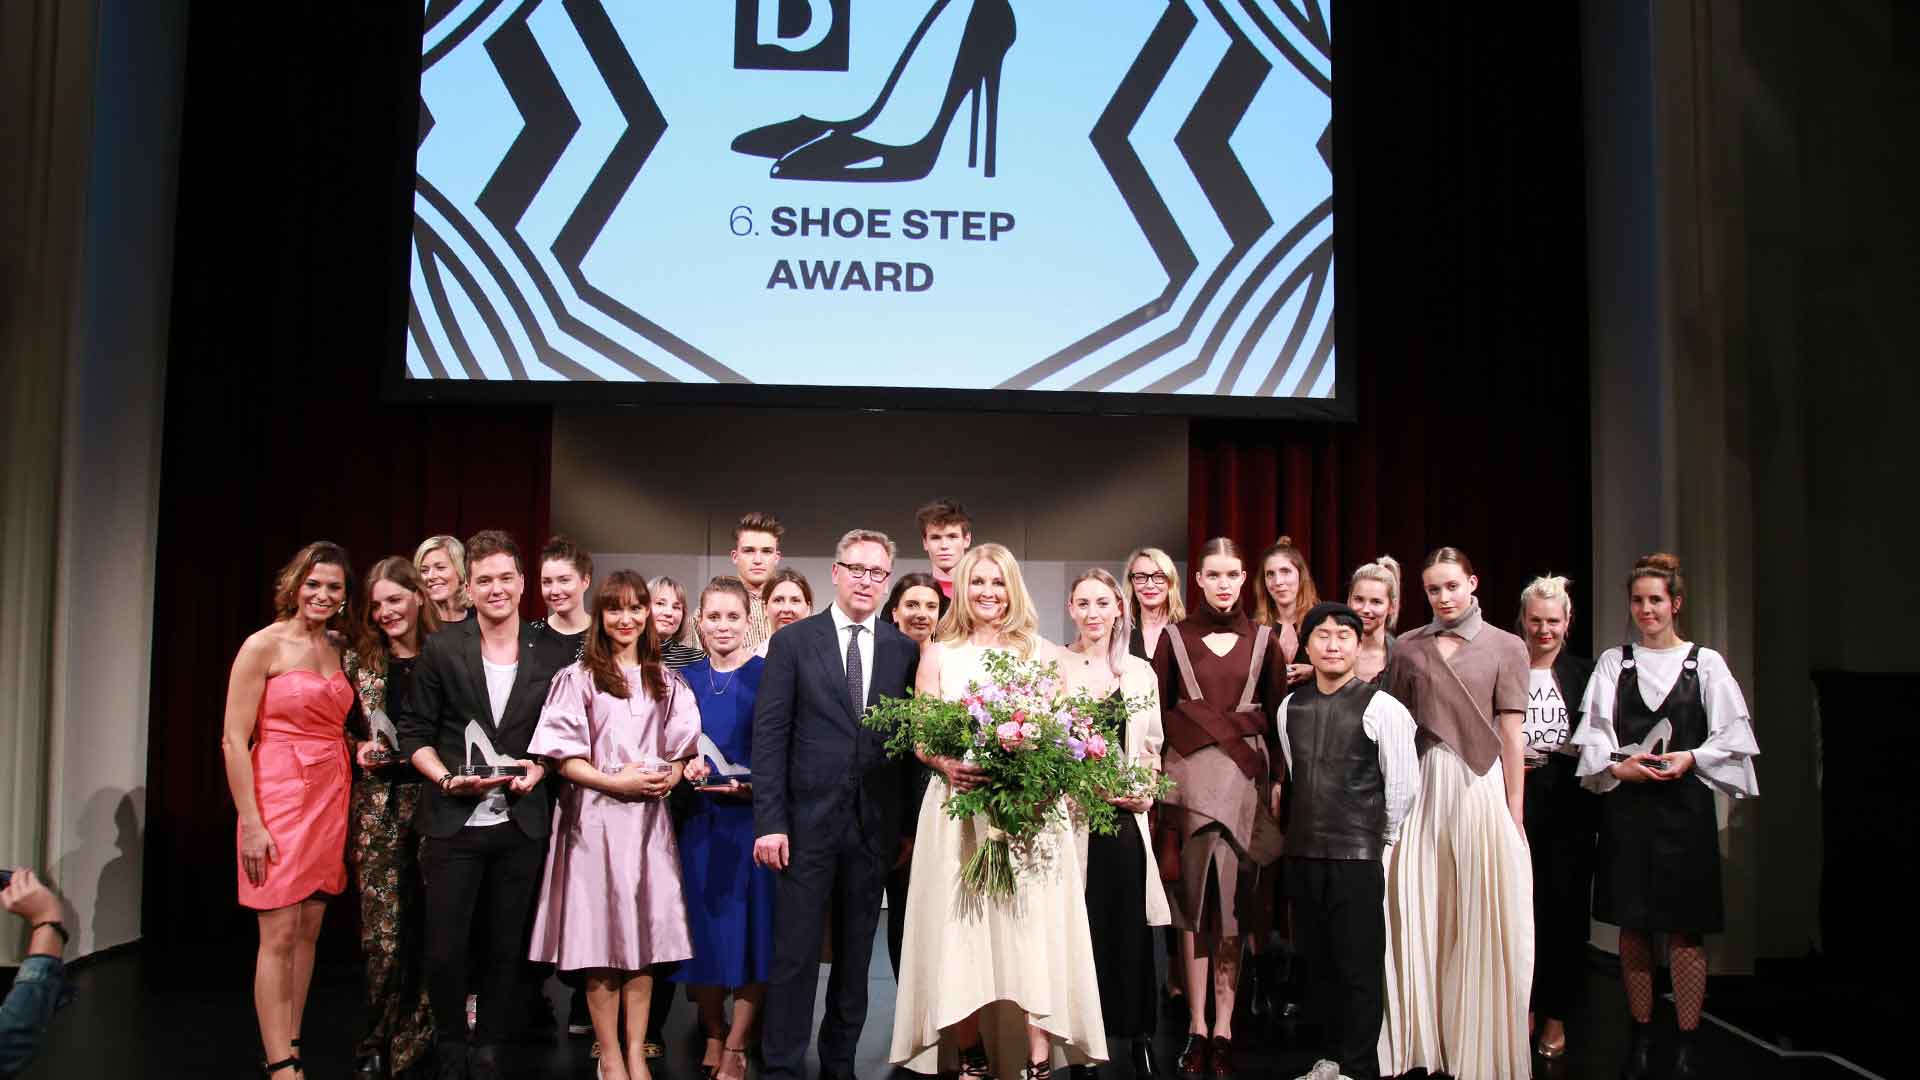 Shoe Step Award